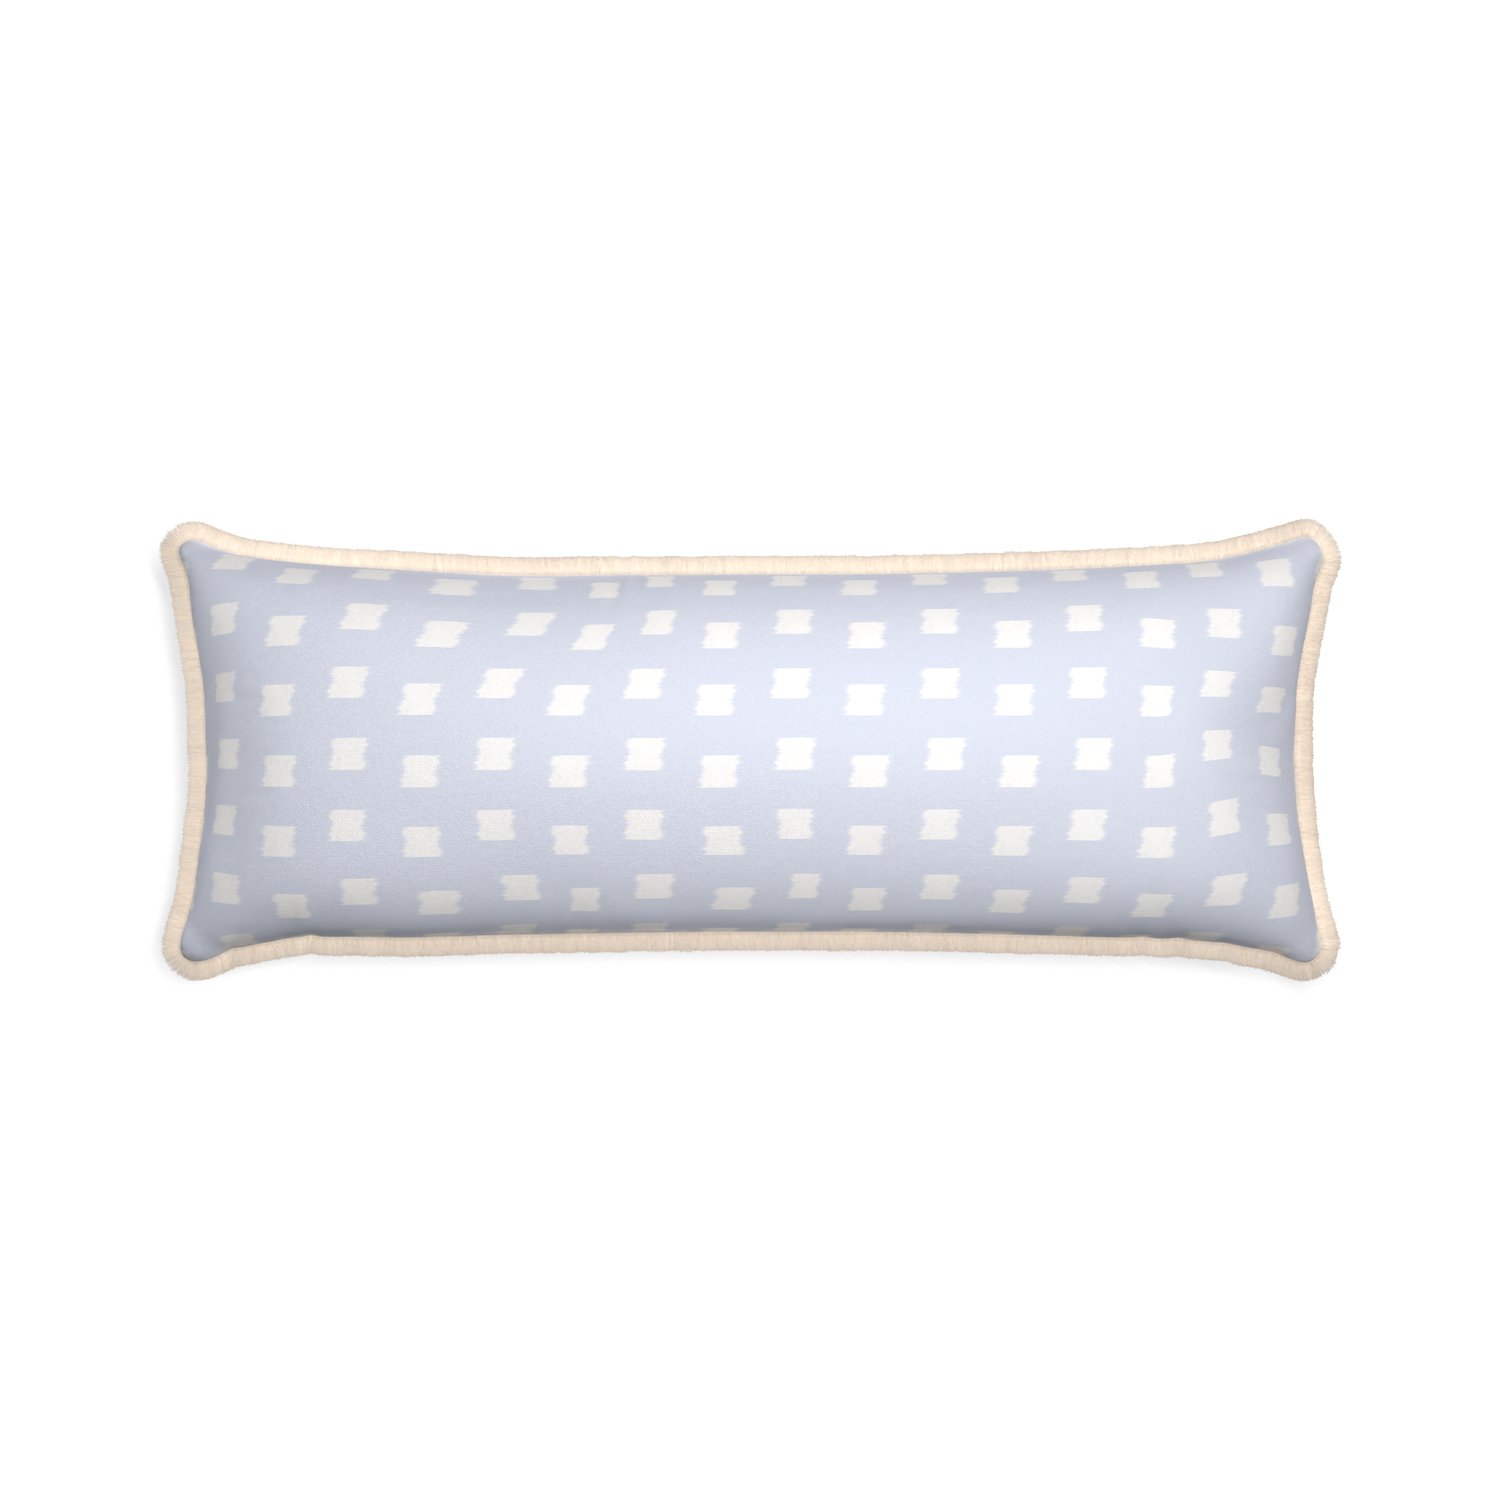 Xl-lumbar denton custom pillow with cream fringe on white background